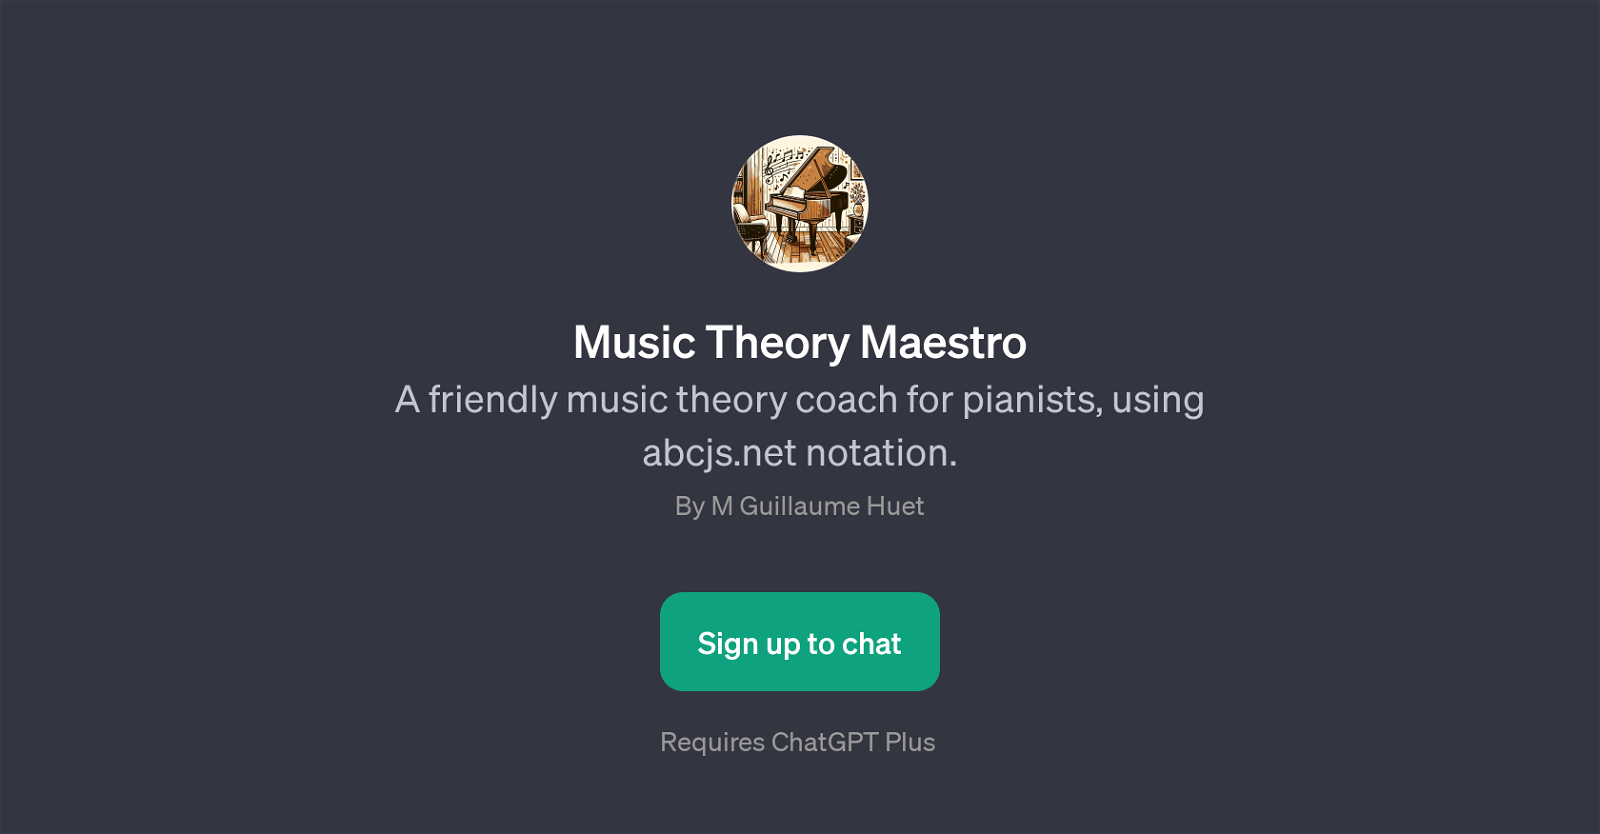 Music Theory Maestro website